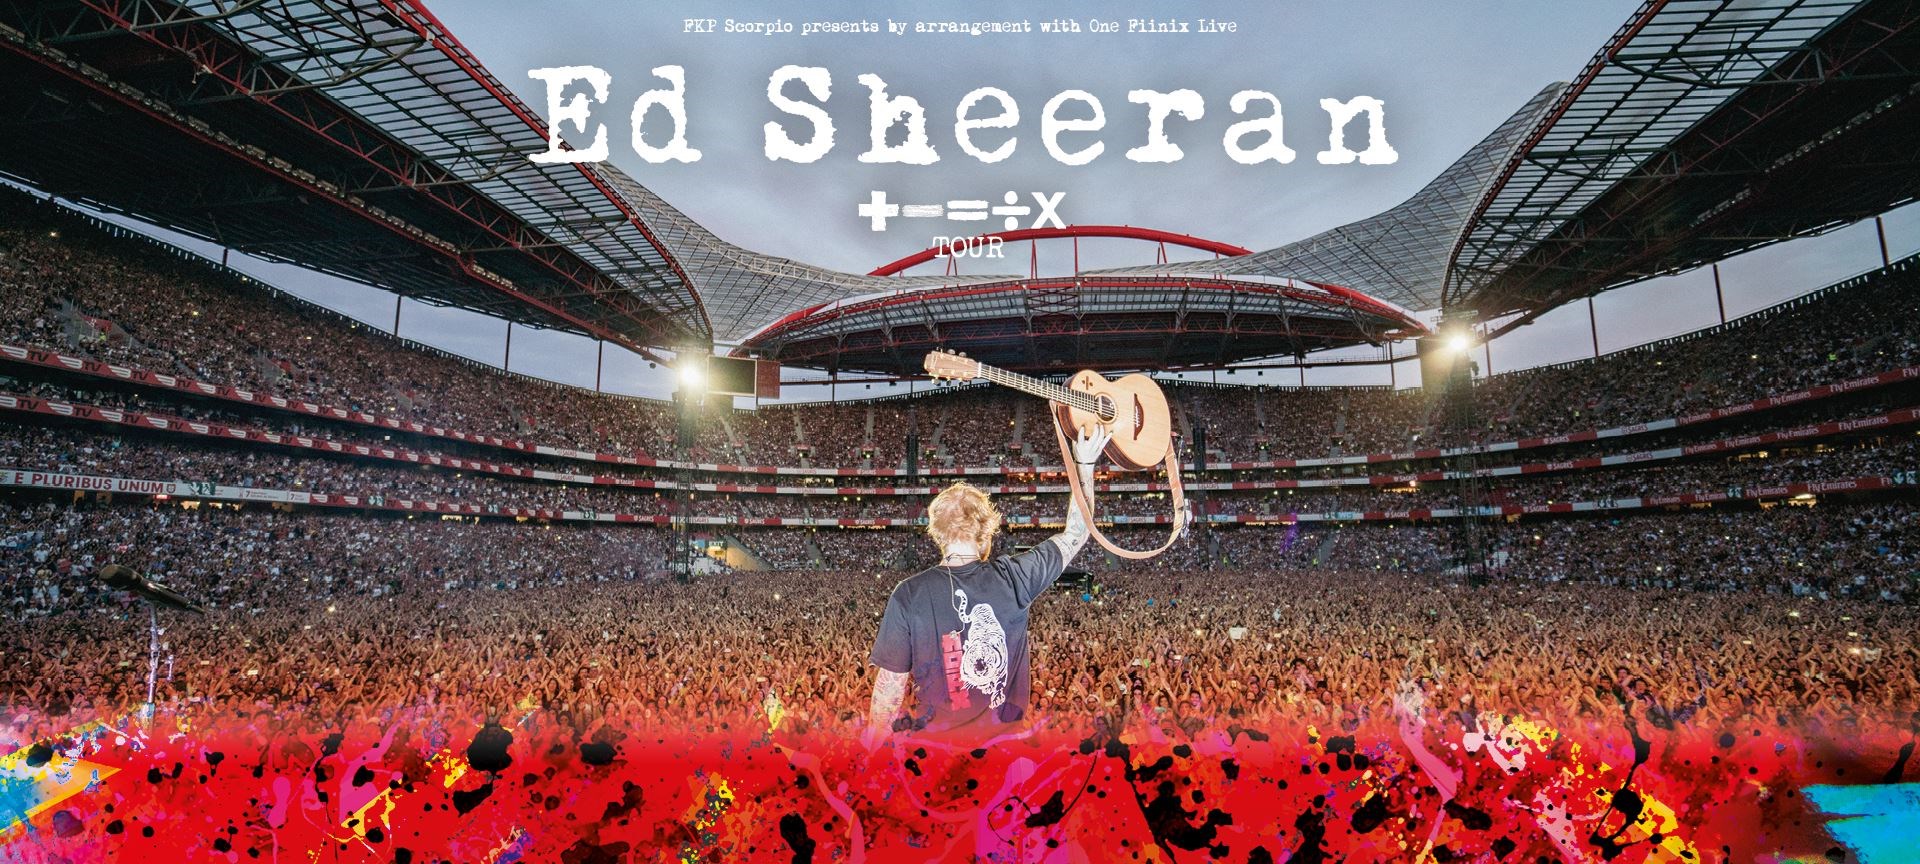 Ed Sheeran - Konsertbuss